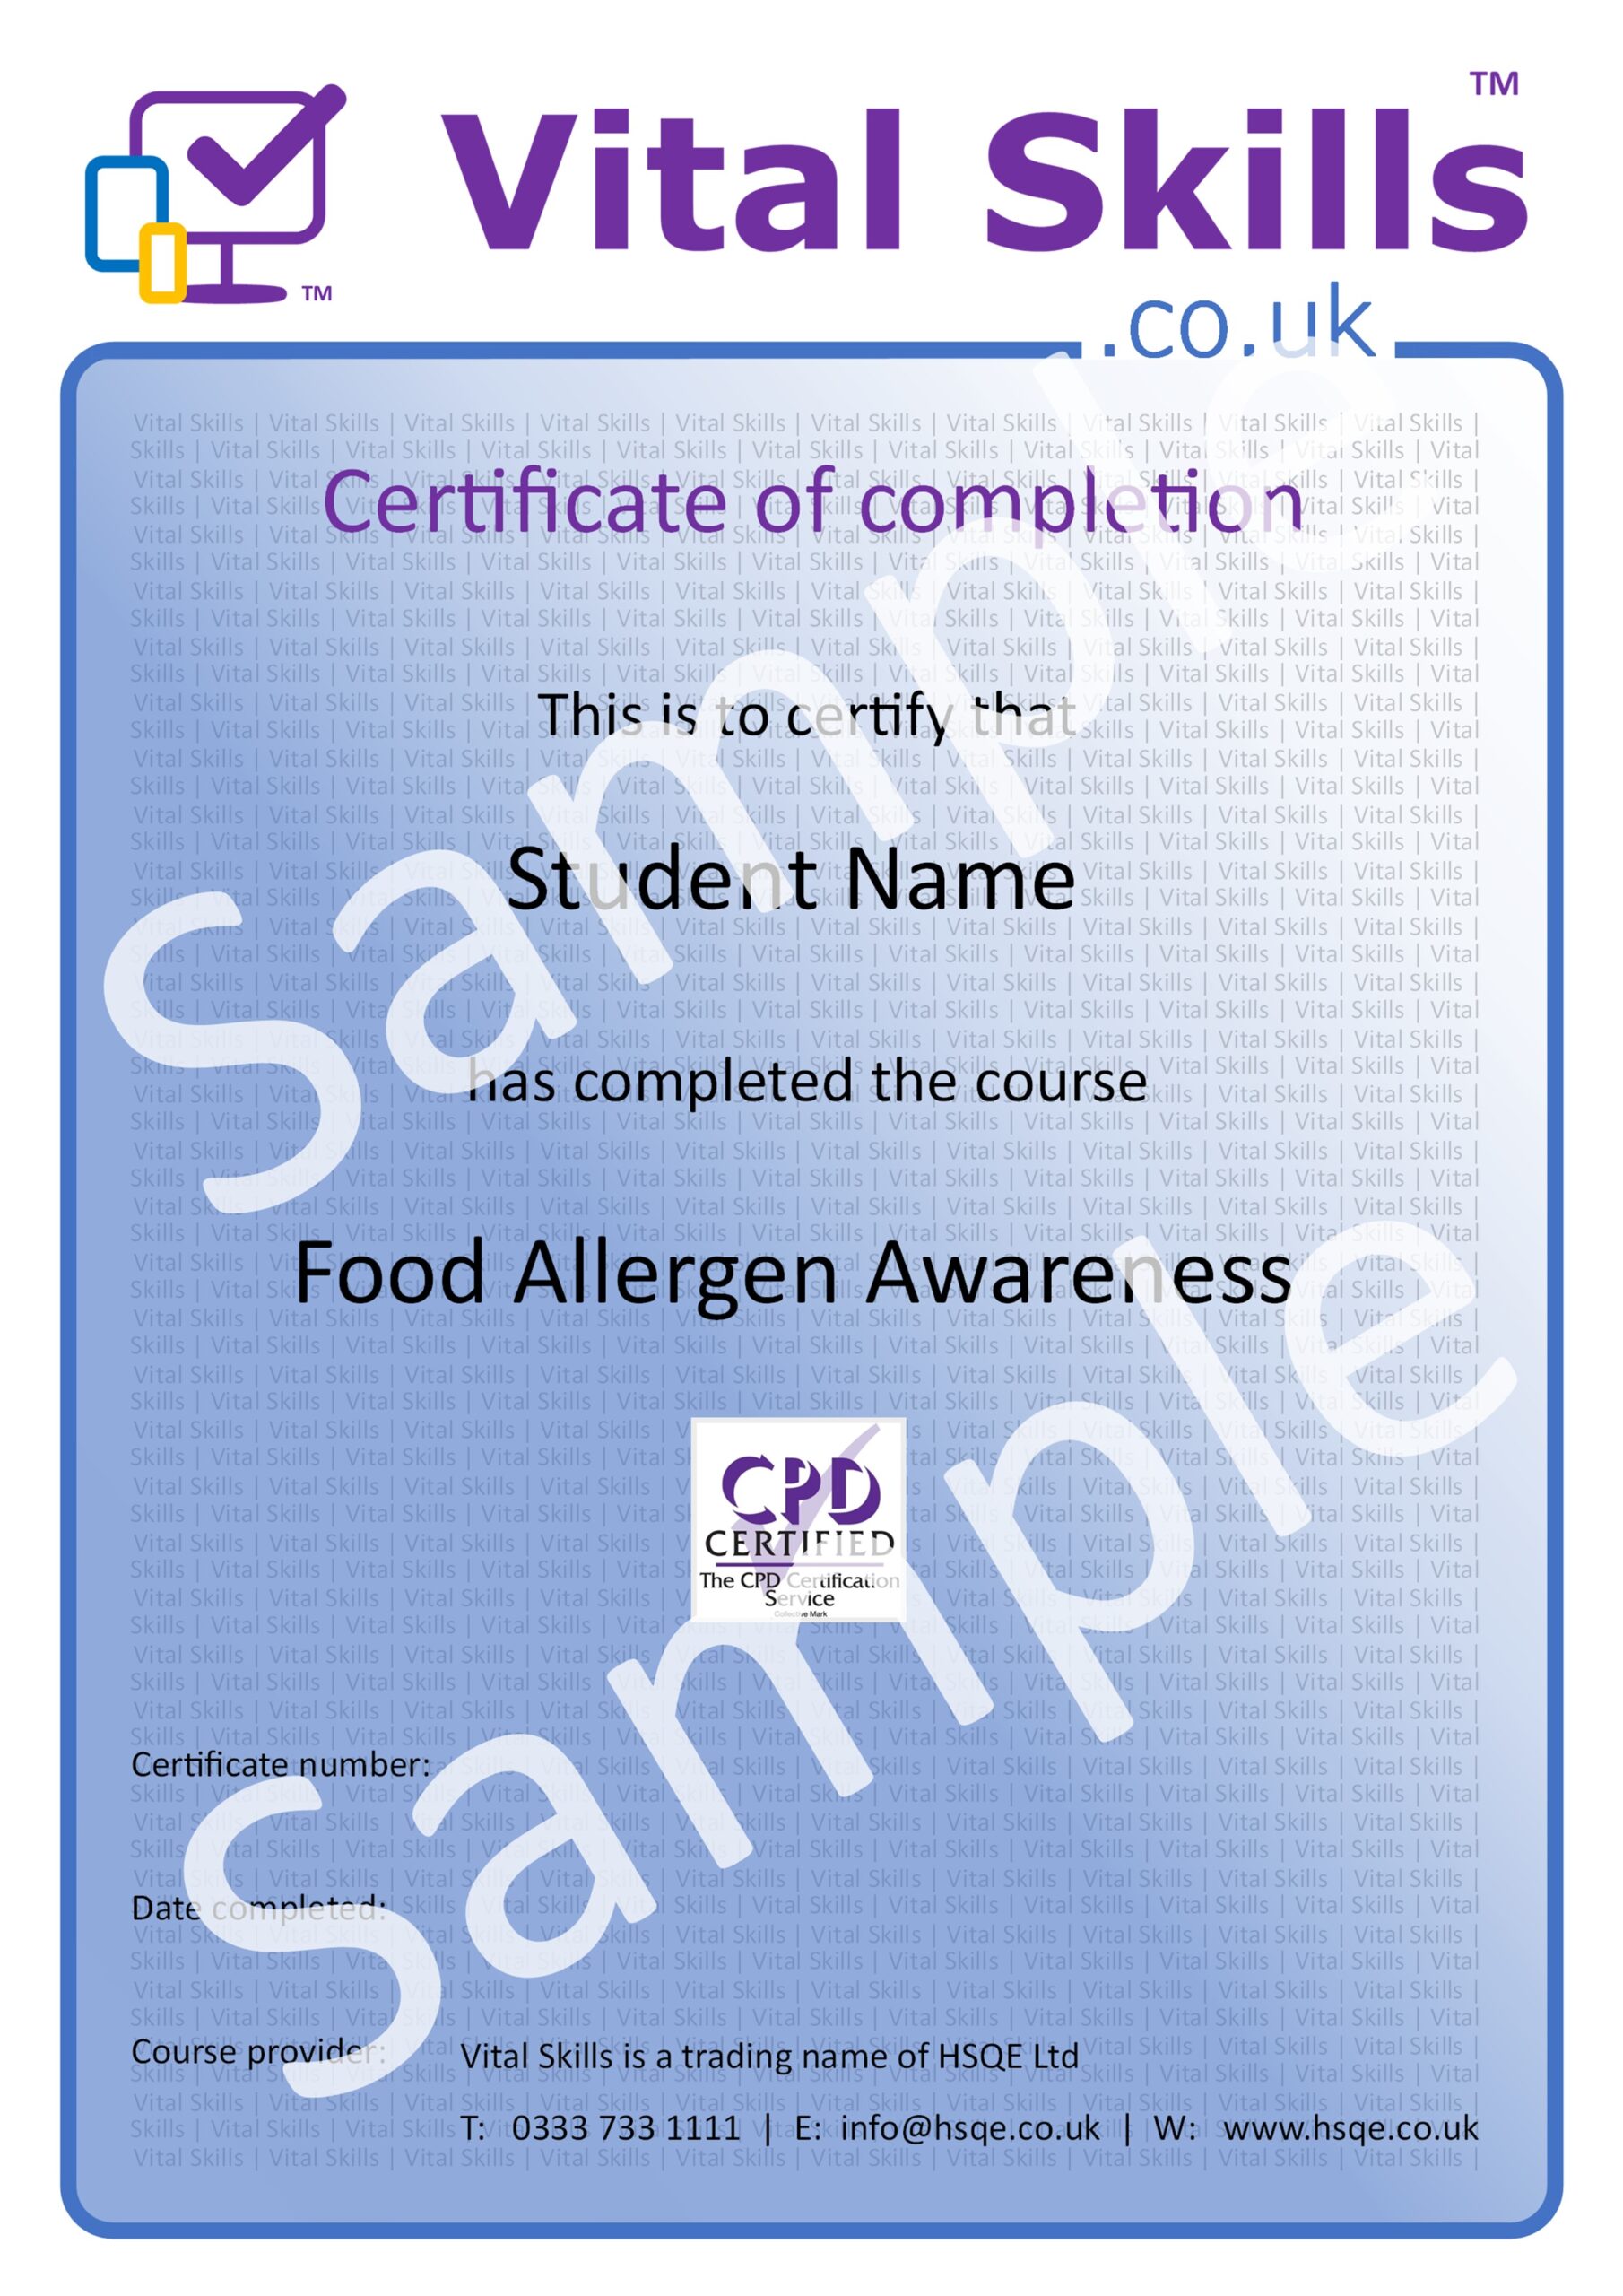 Food Allergen Awareness Online Training Course Certificate HSQE Vital Skills